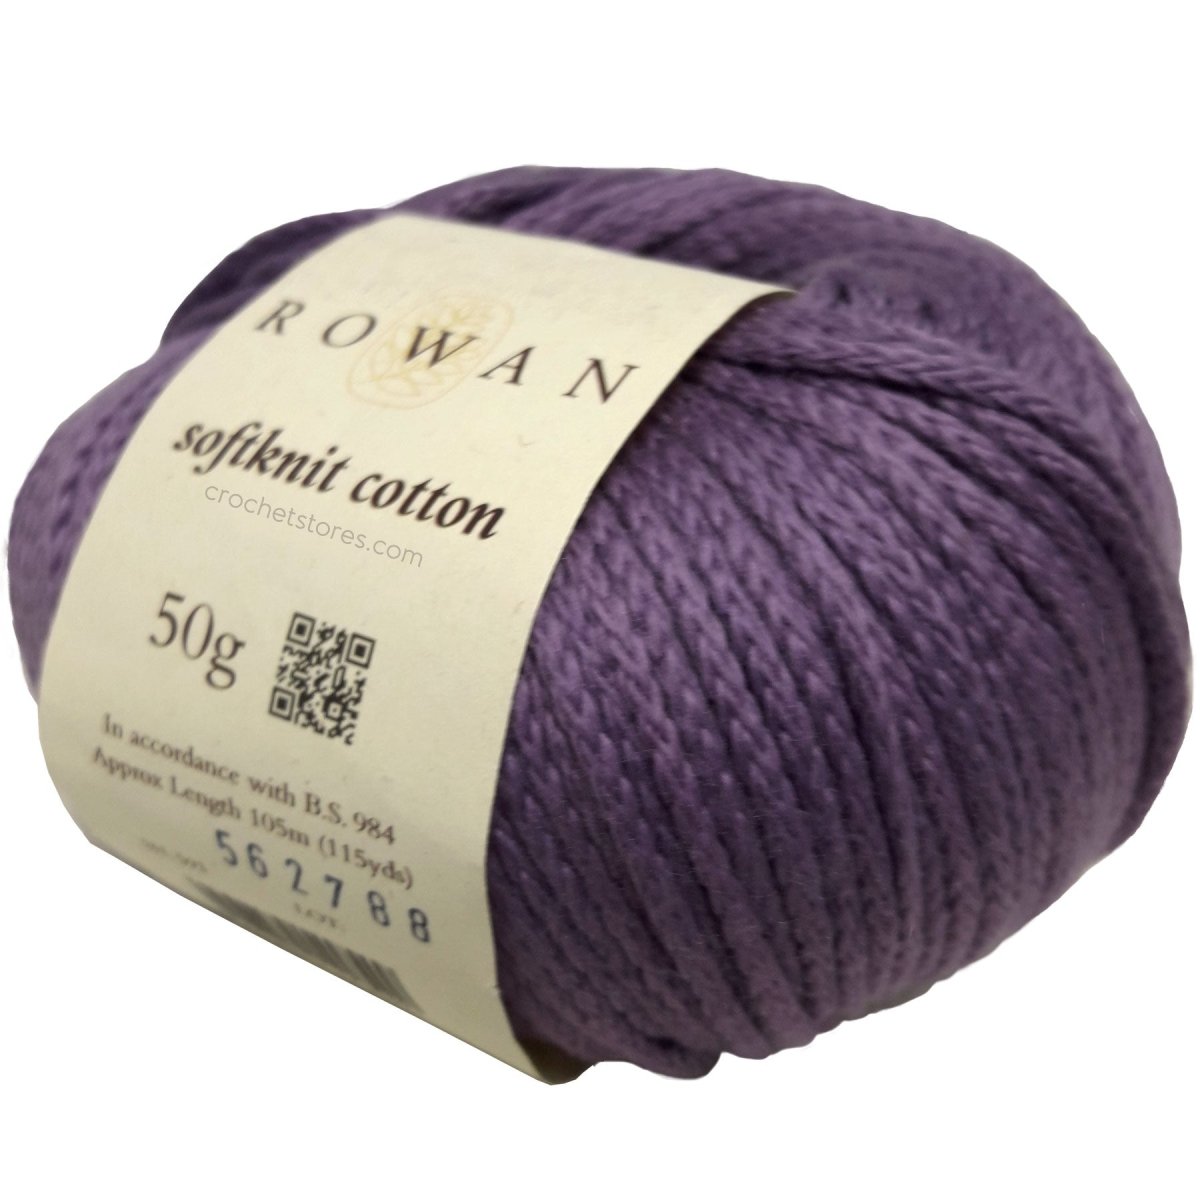 SOFTKNIT COTTON - Crochetstores9802155-5914082700039949